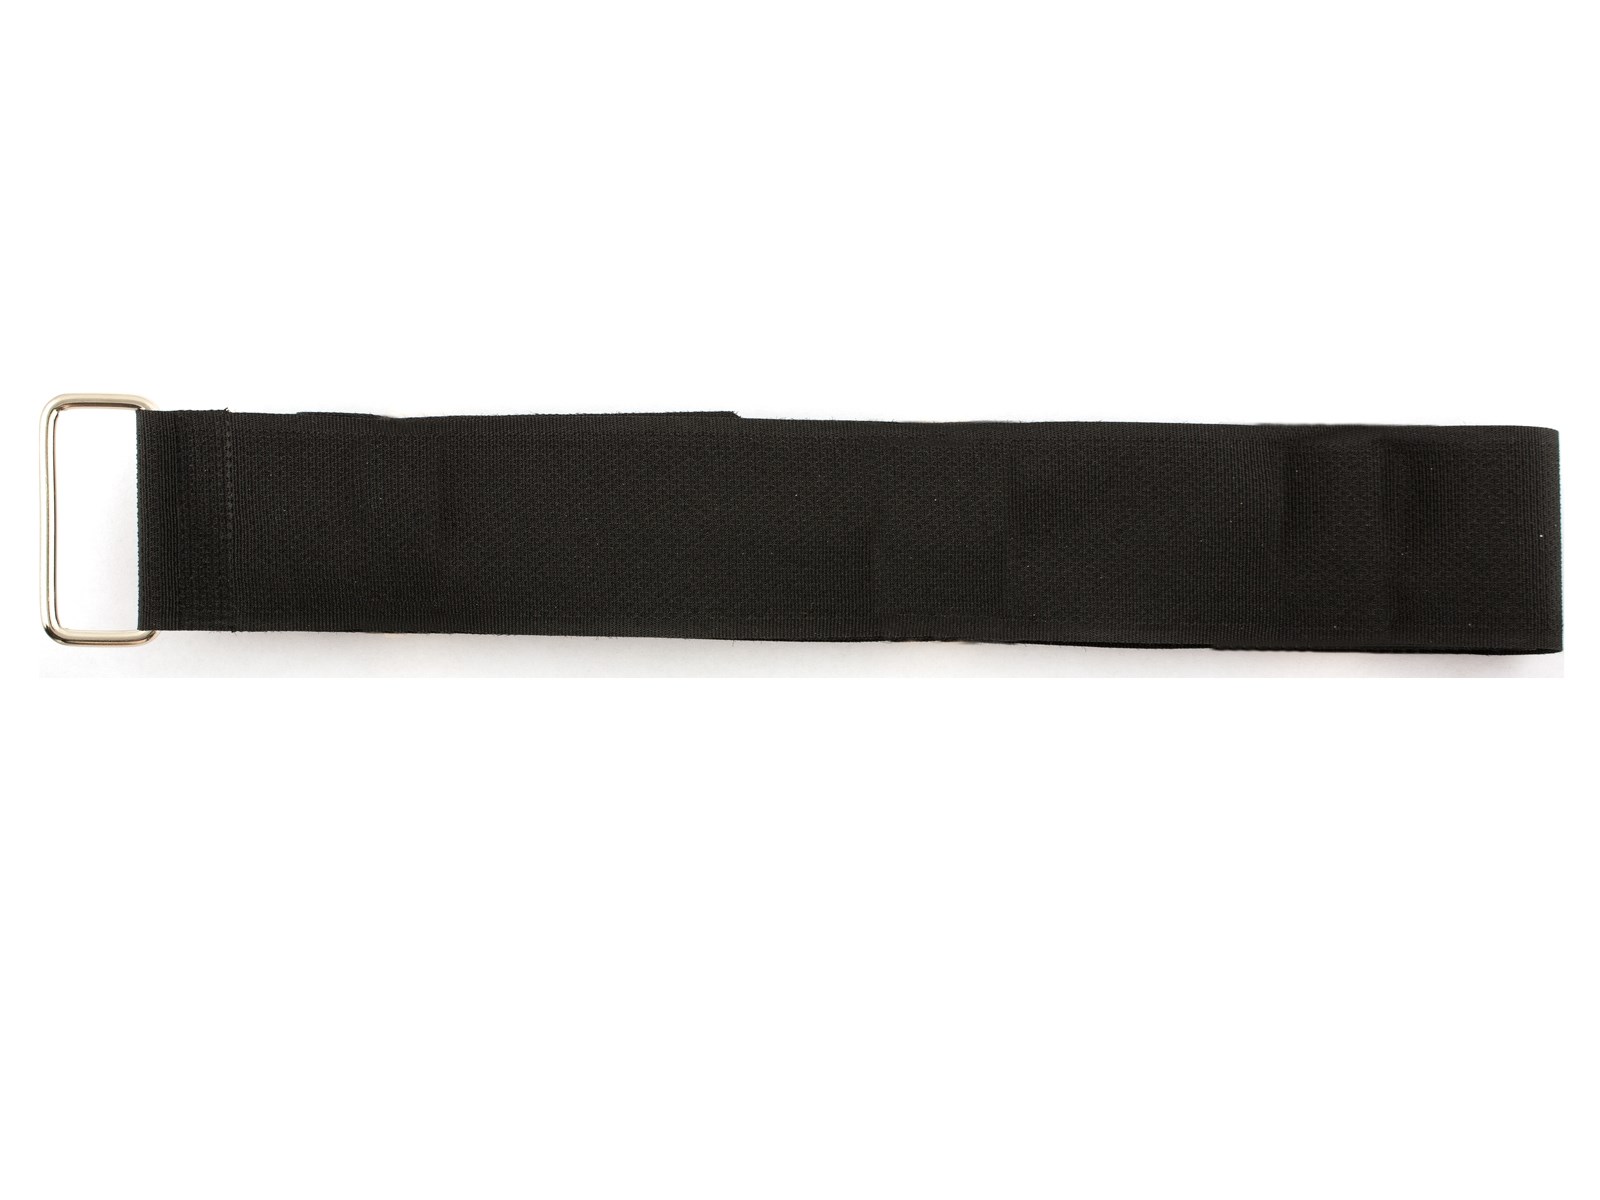 1 x 24 Black Cinching Strap with Metal Buckle, Bundle of 10